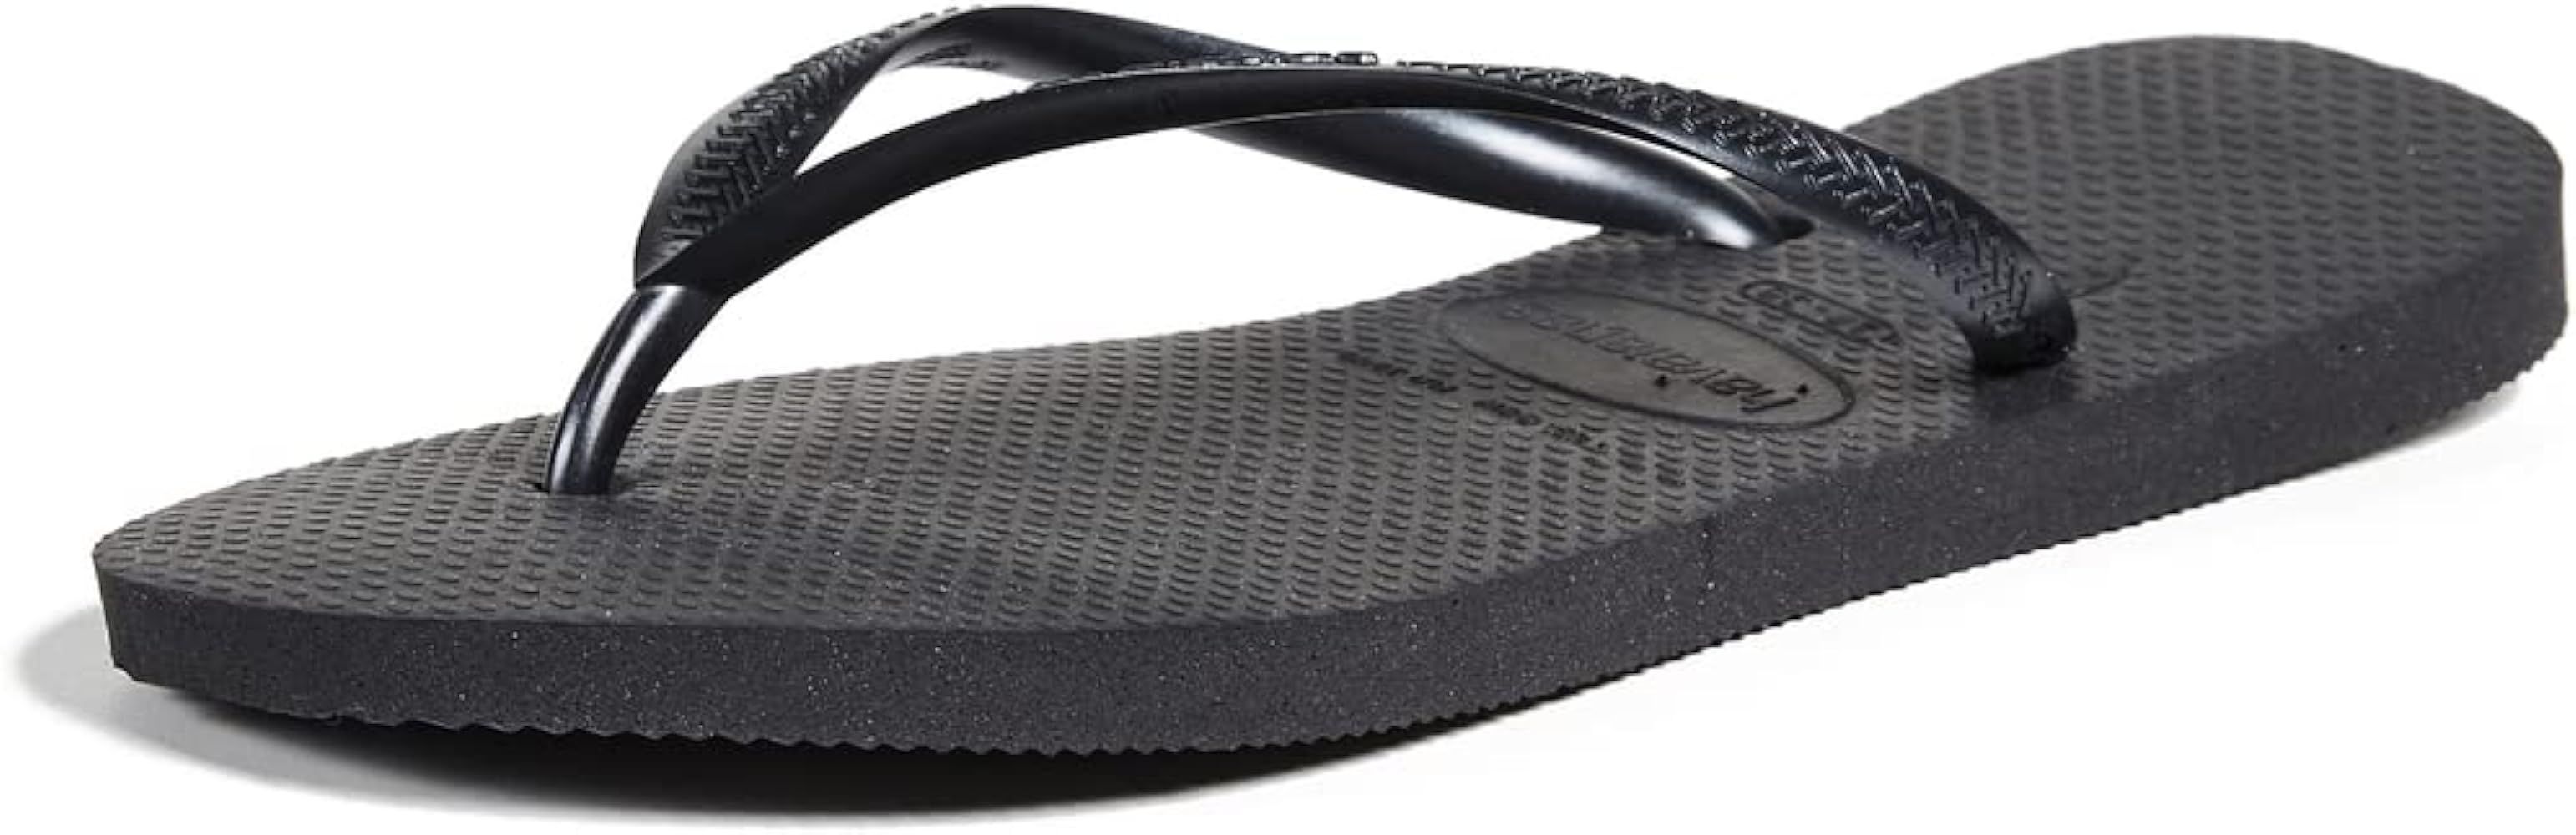 Havaianas Women's Slim Flip Flop Sandals, Black, Size 9/10 Women's | Amazon (US)